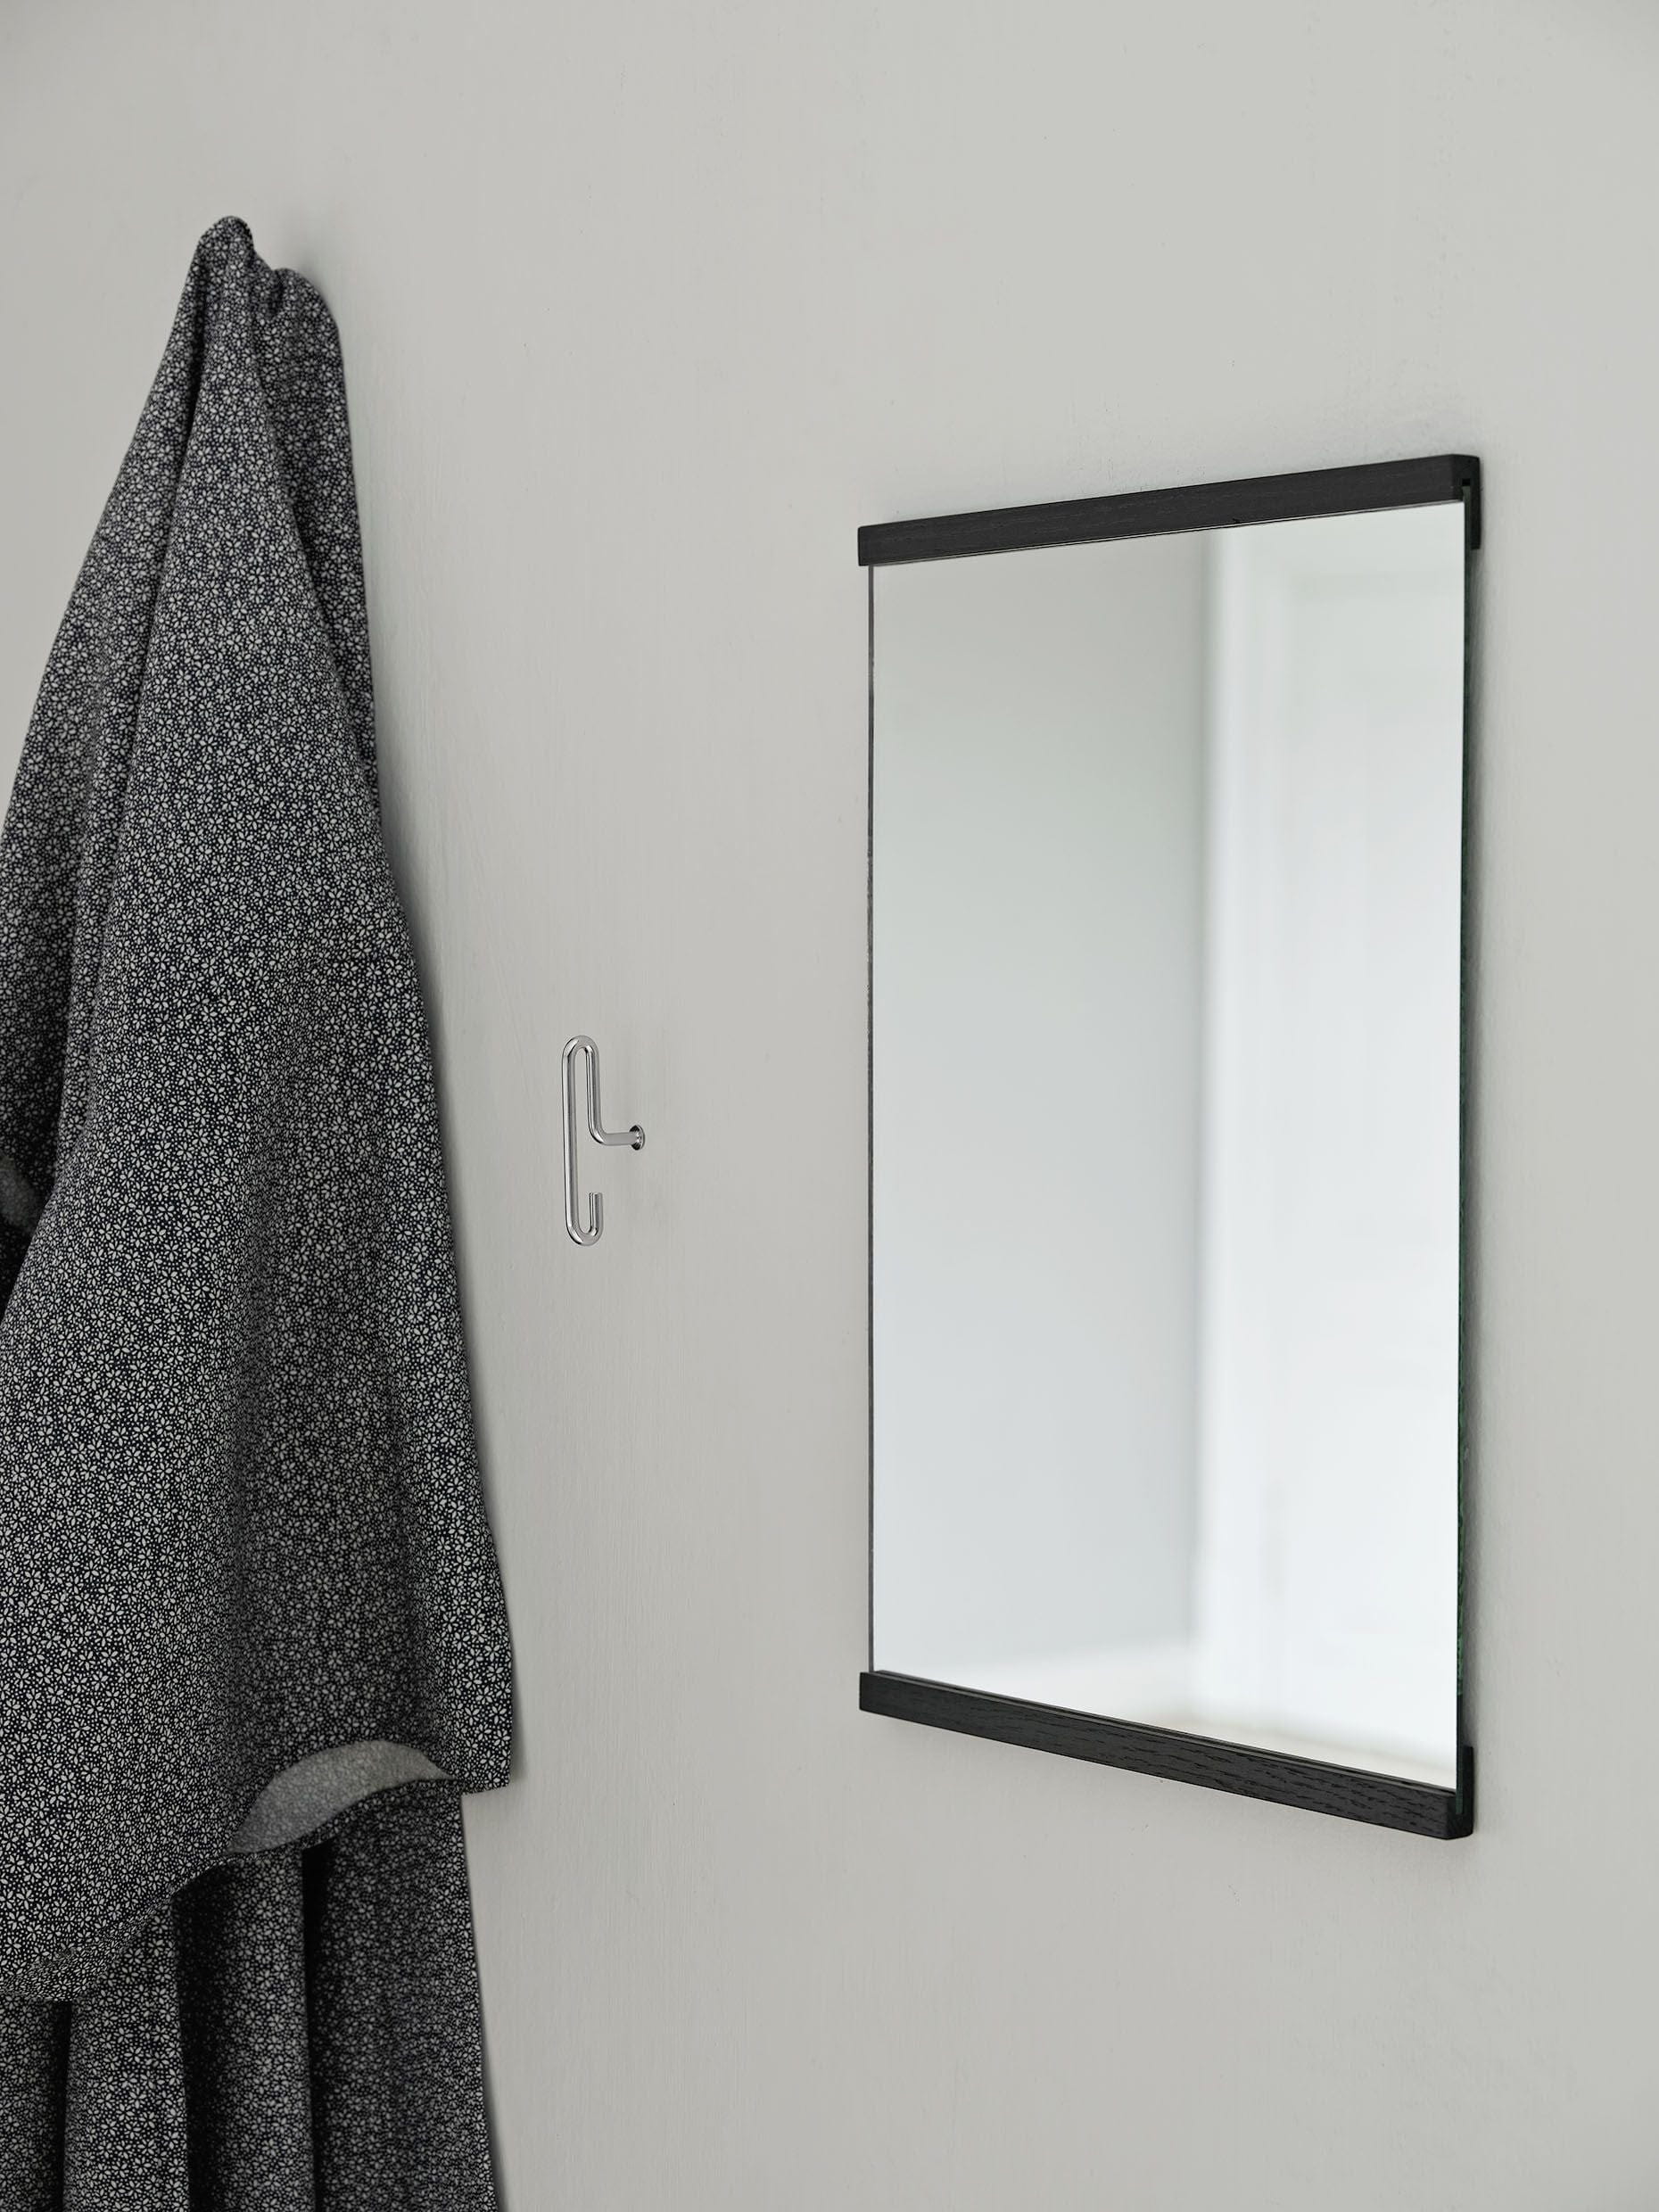 Moebe Rektangulær væg spejl 71,9x50 cm, sort